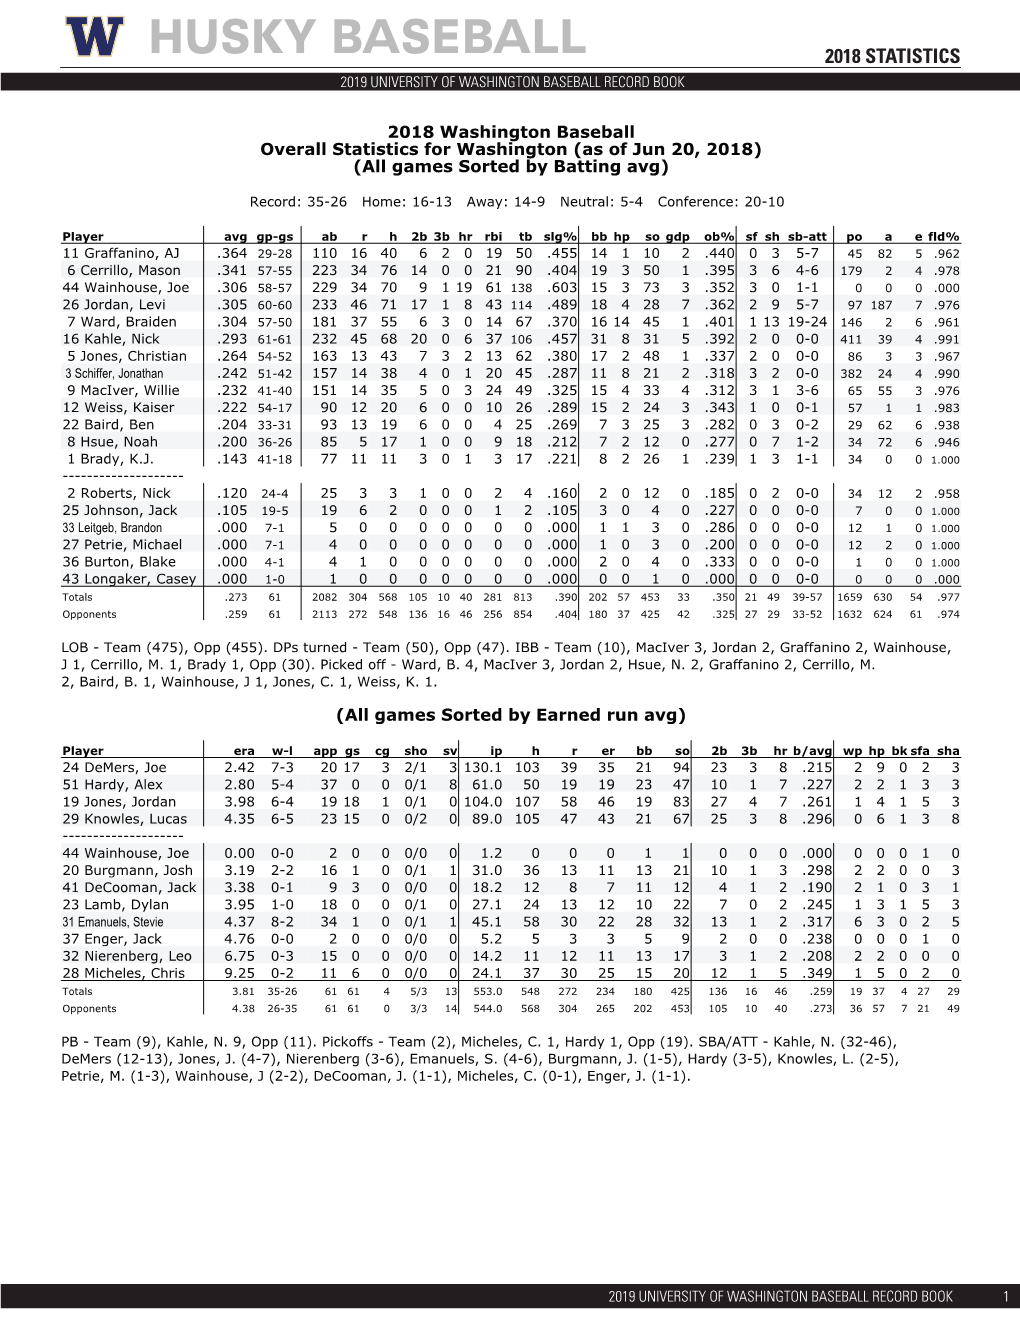 Husky Baseball 2018 Statistics 2019 University of Washington Baseball Record Book